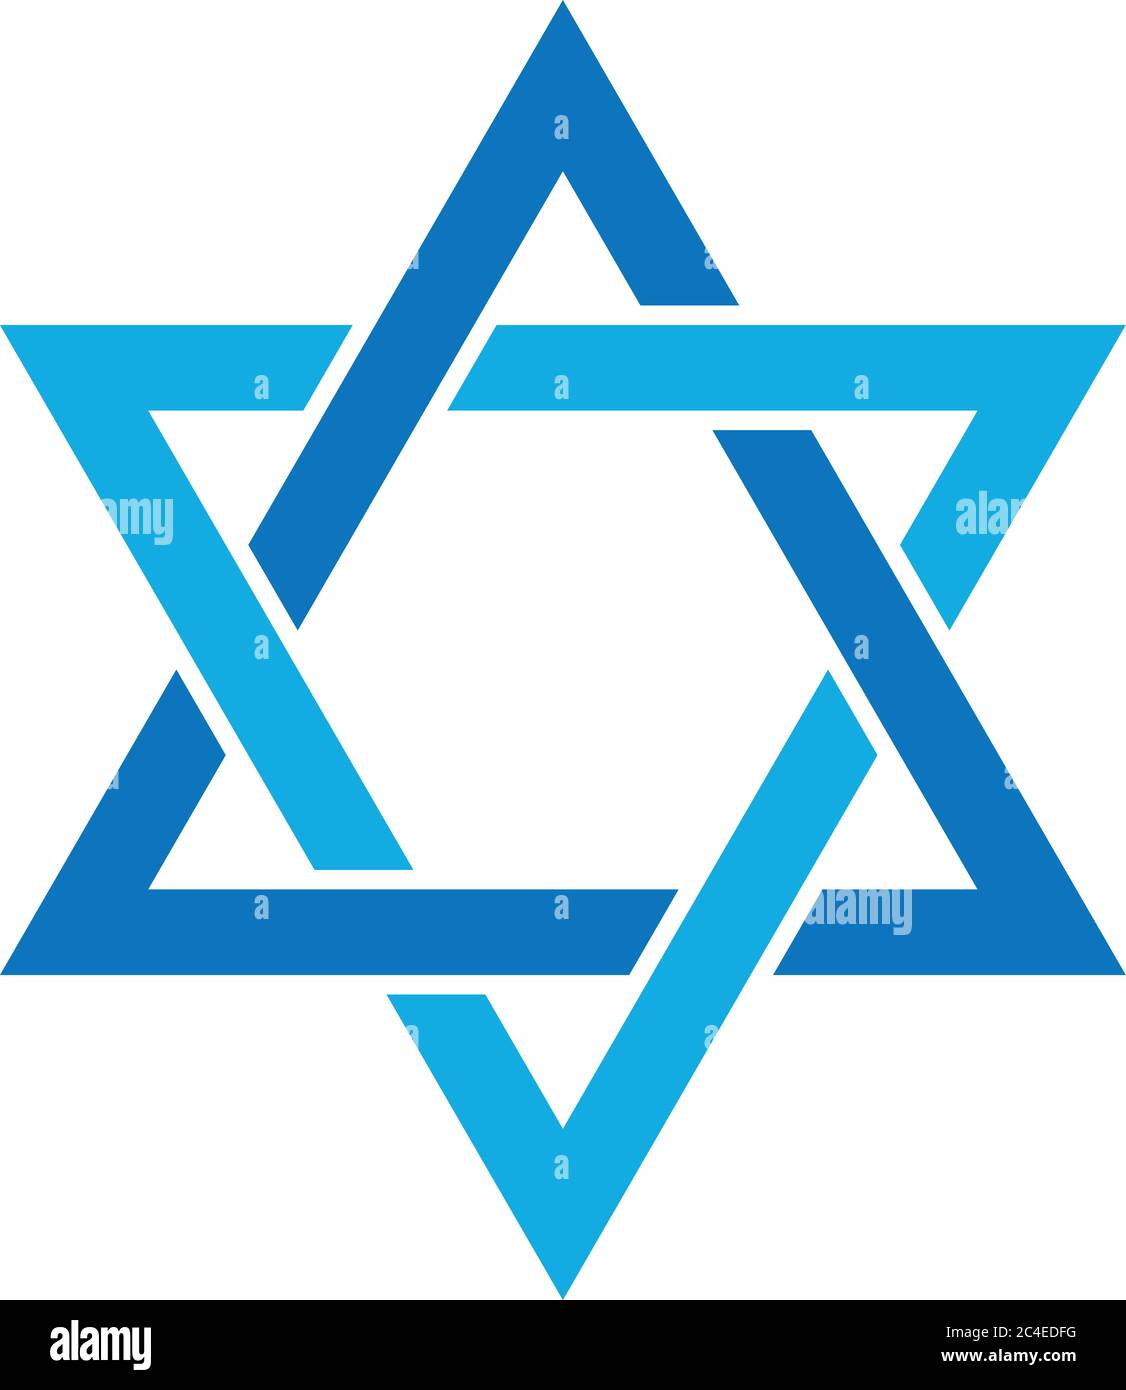 Star of David. Hexagram sign. Symbol of Jewish identity and Judaism. Simple flat blue illustration. Stock Vector